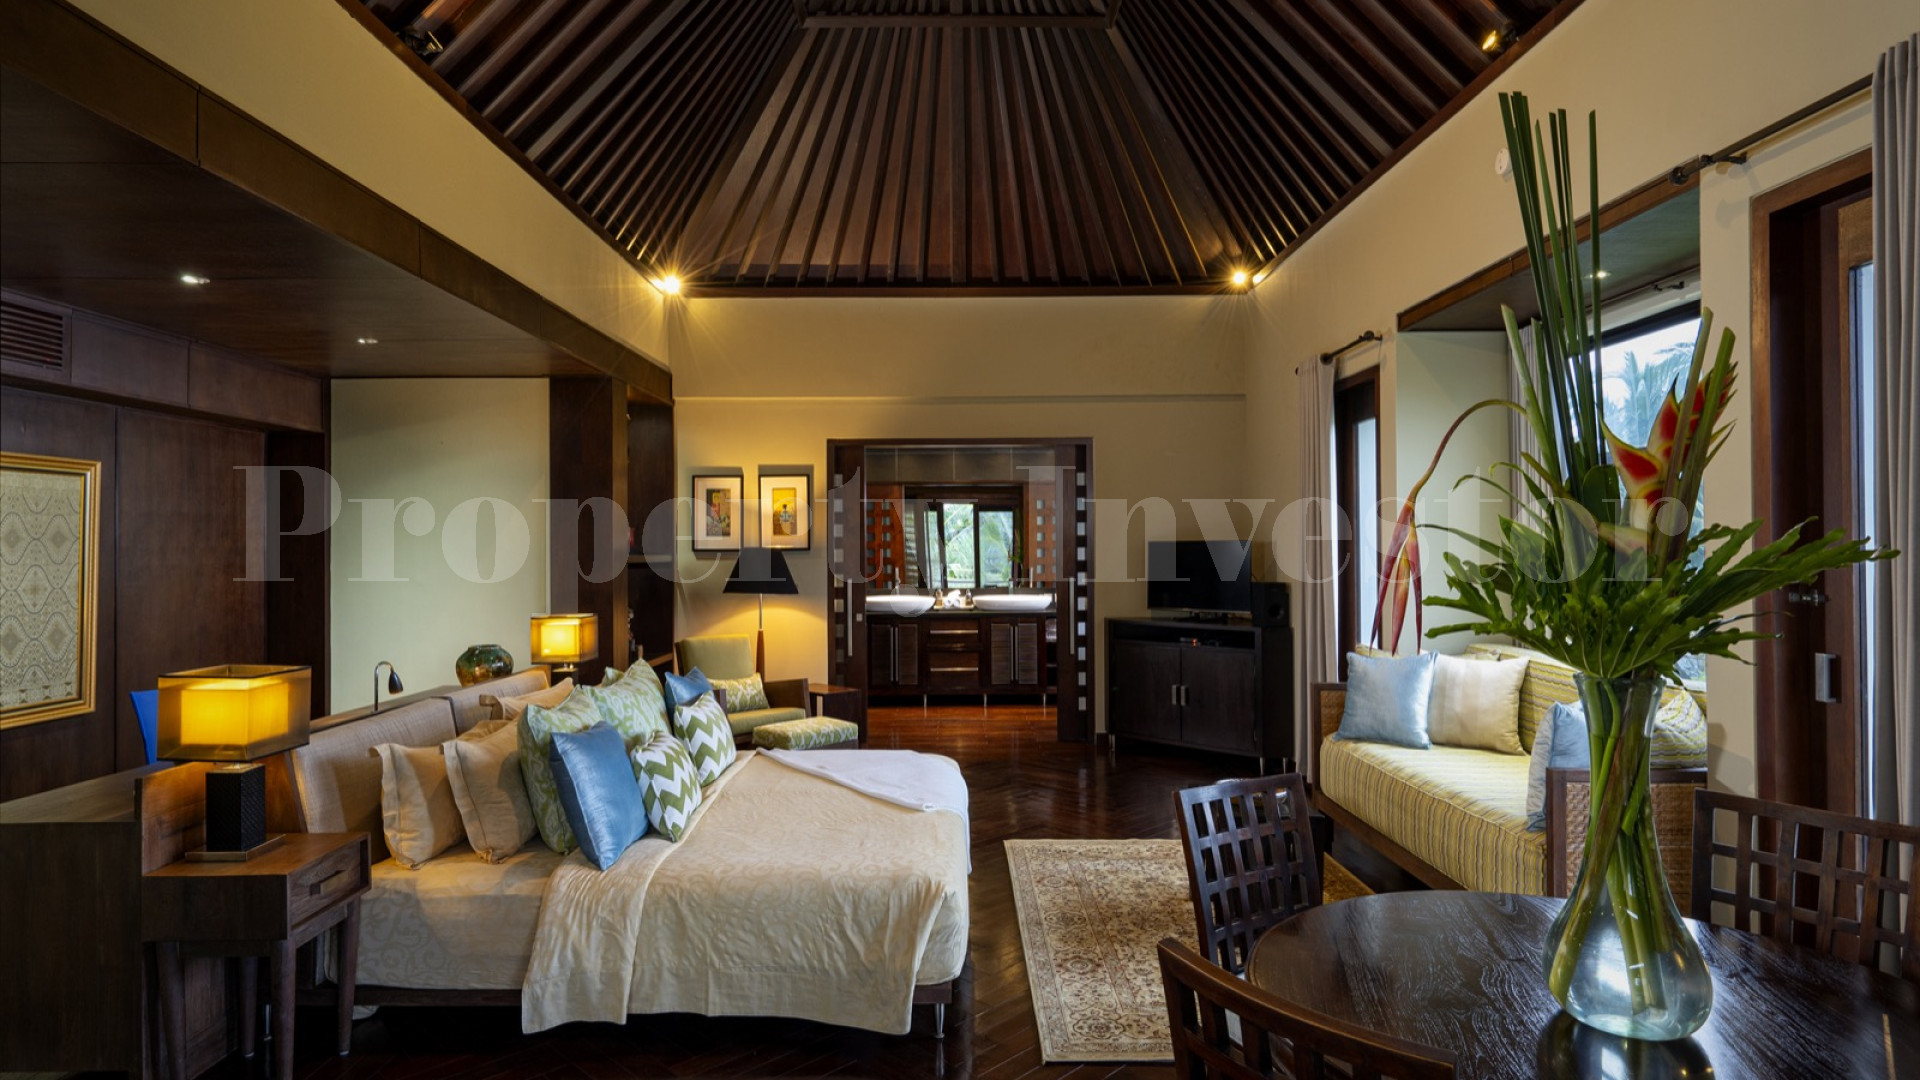 Award Winning 8 Bedroom Boutique Hotel & Fine Dining Restaurant for Sale in Ubud, Bali